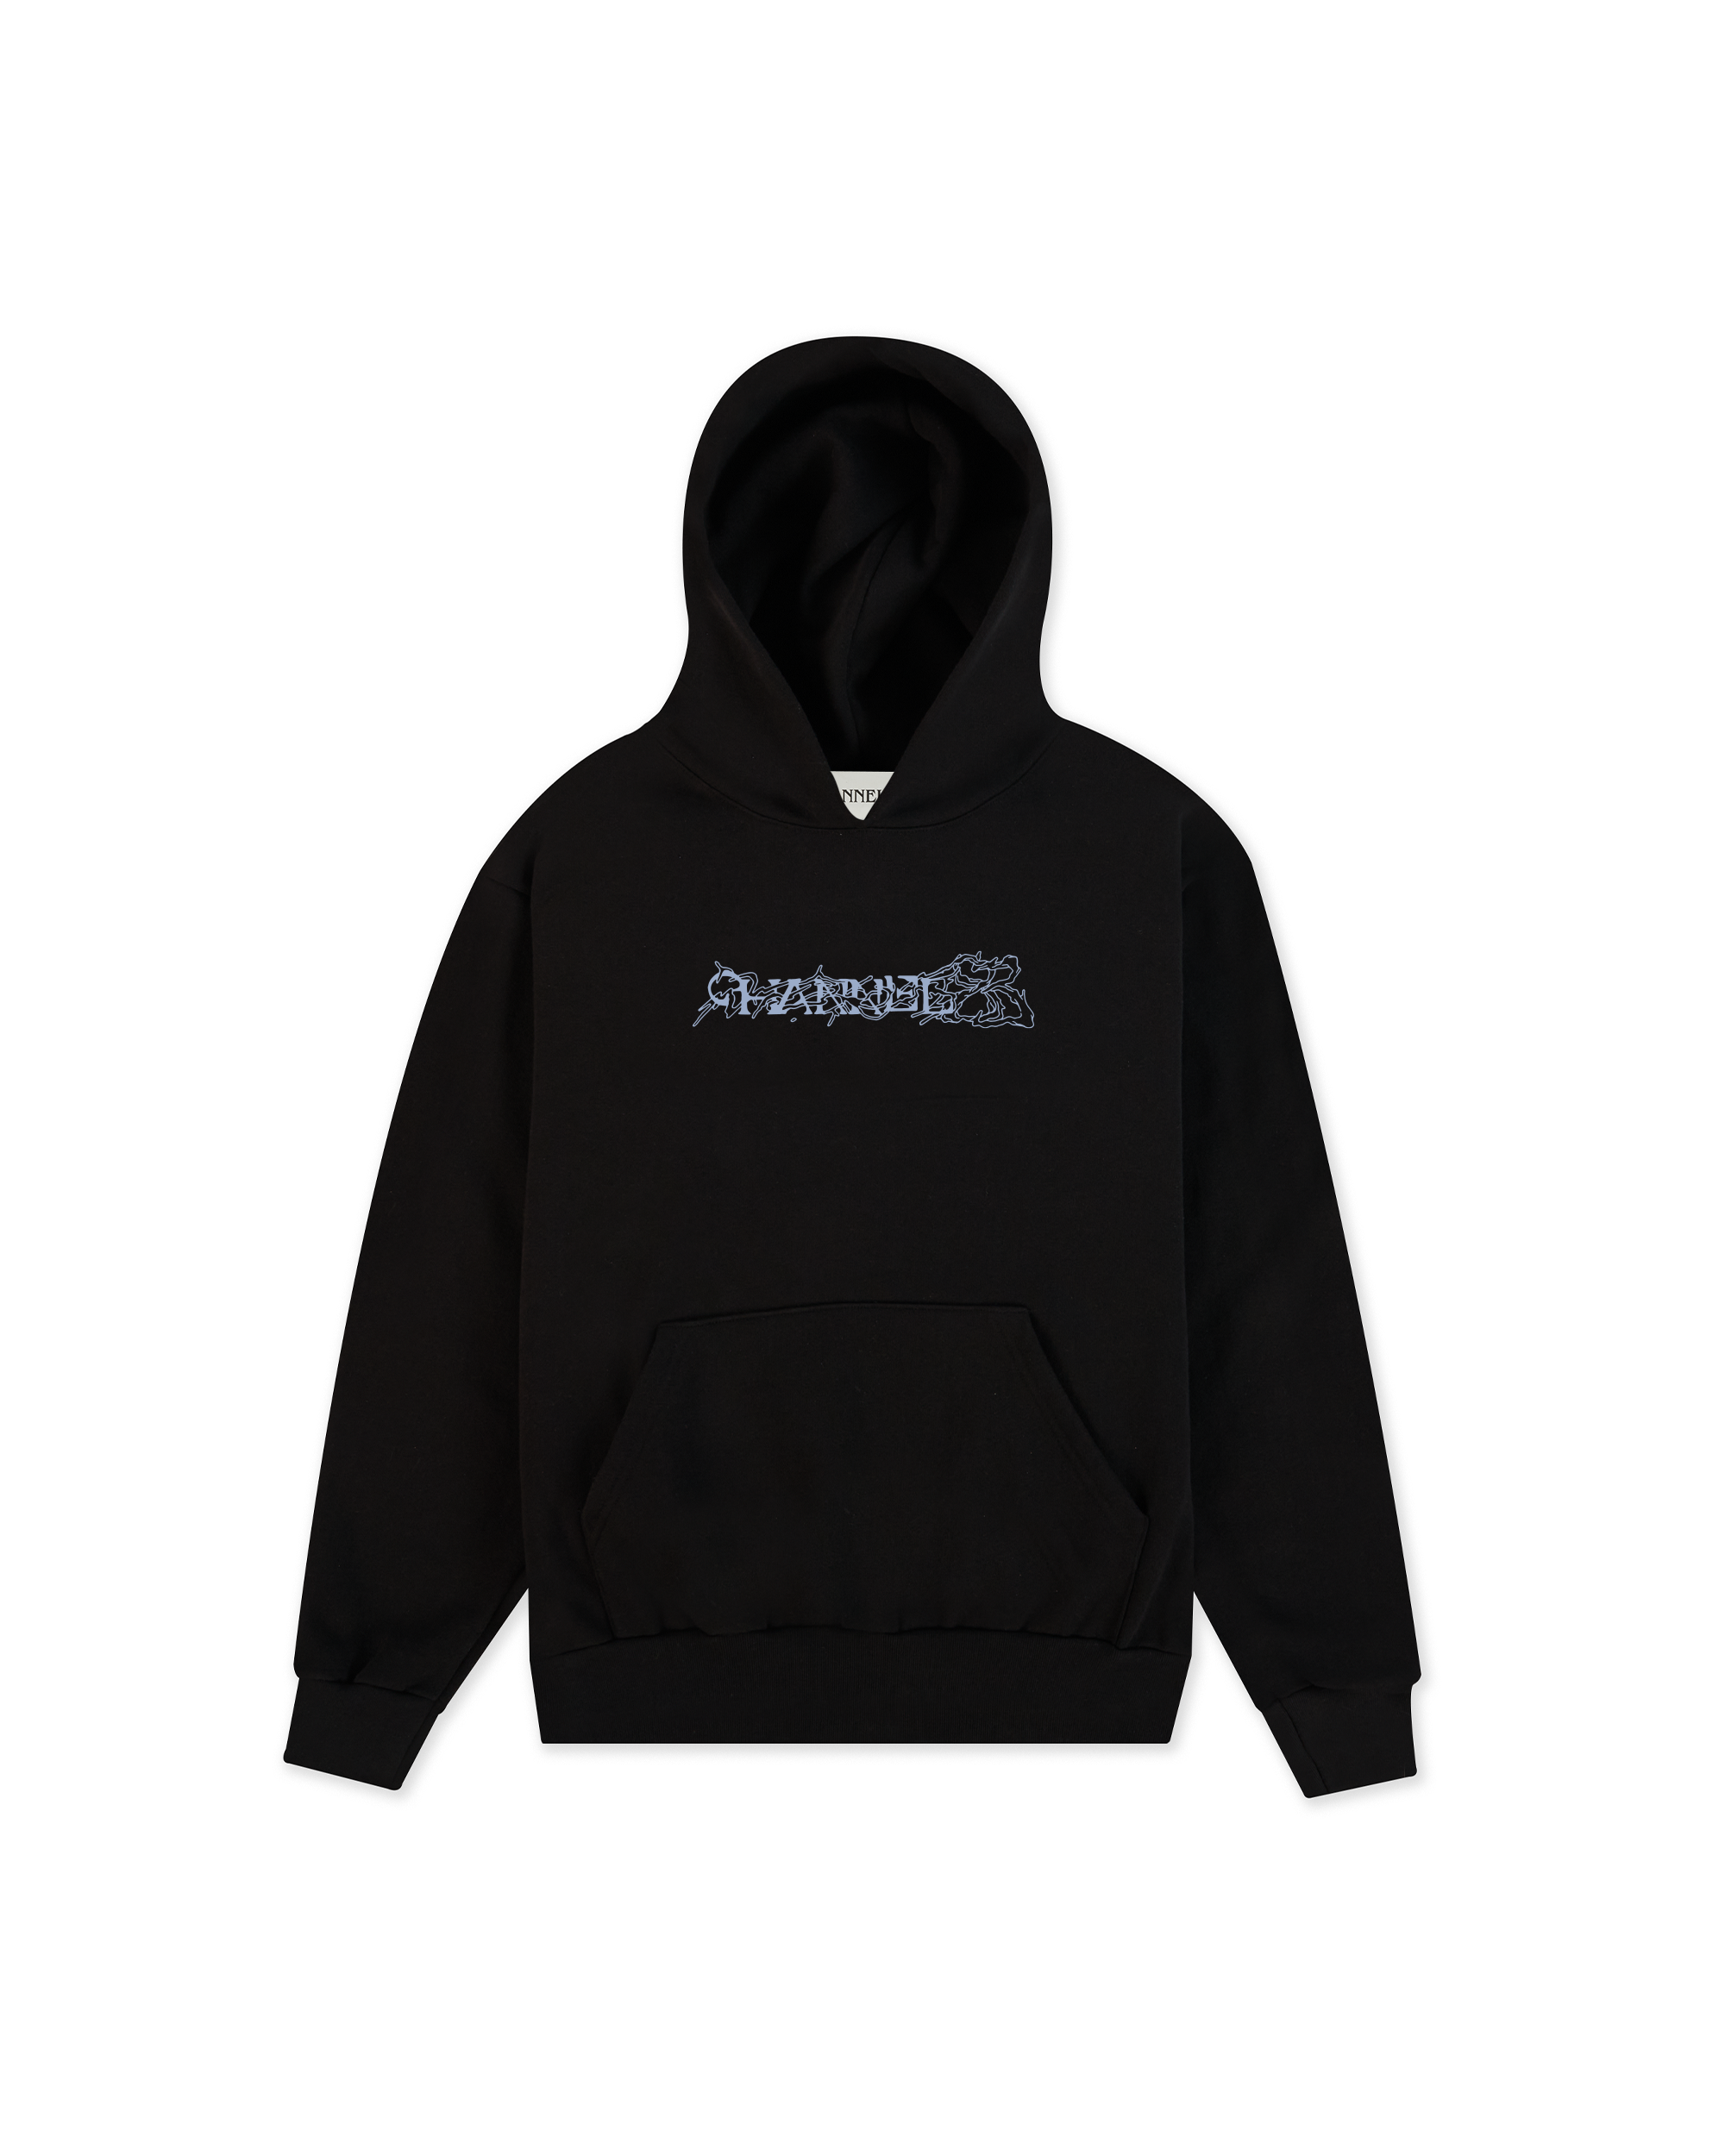 S5 Hooded Sweatshirt - Black